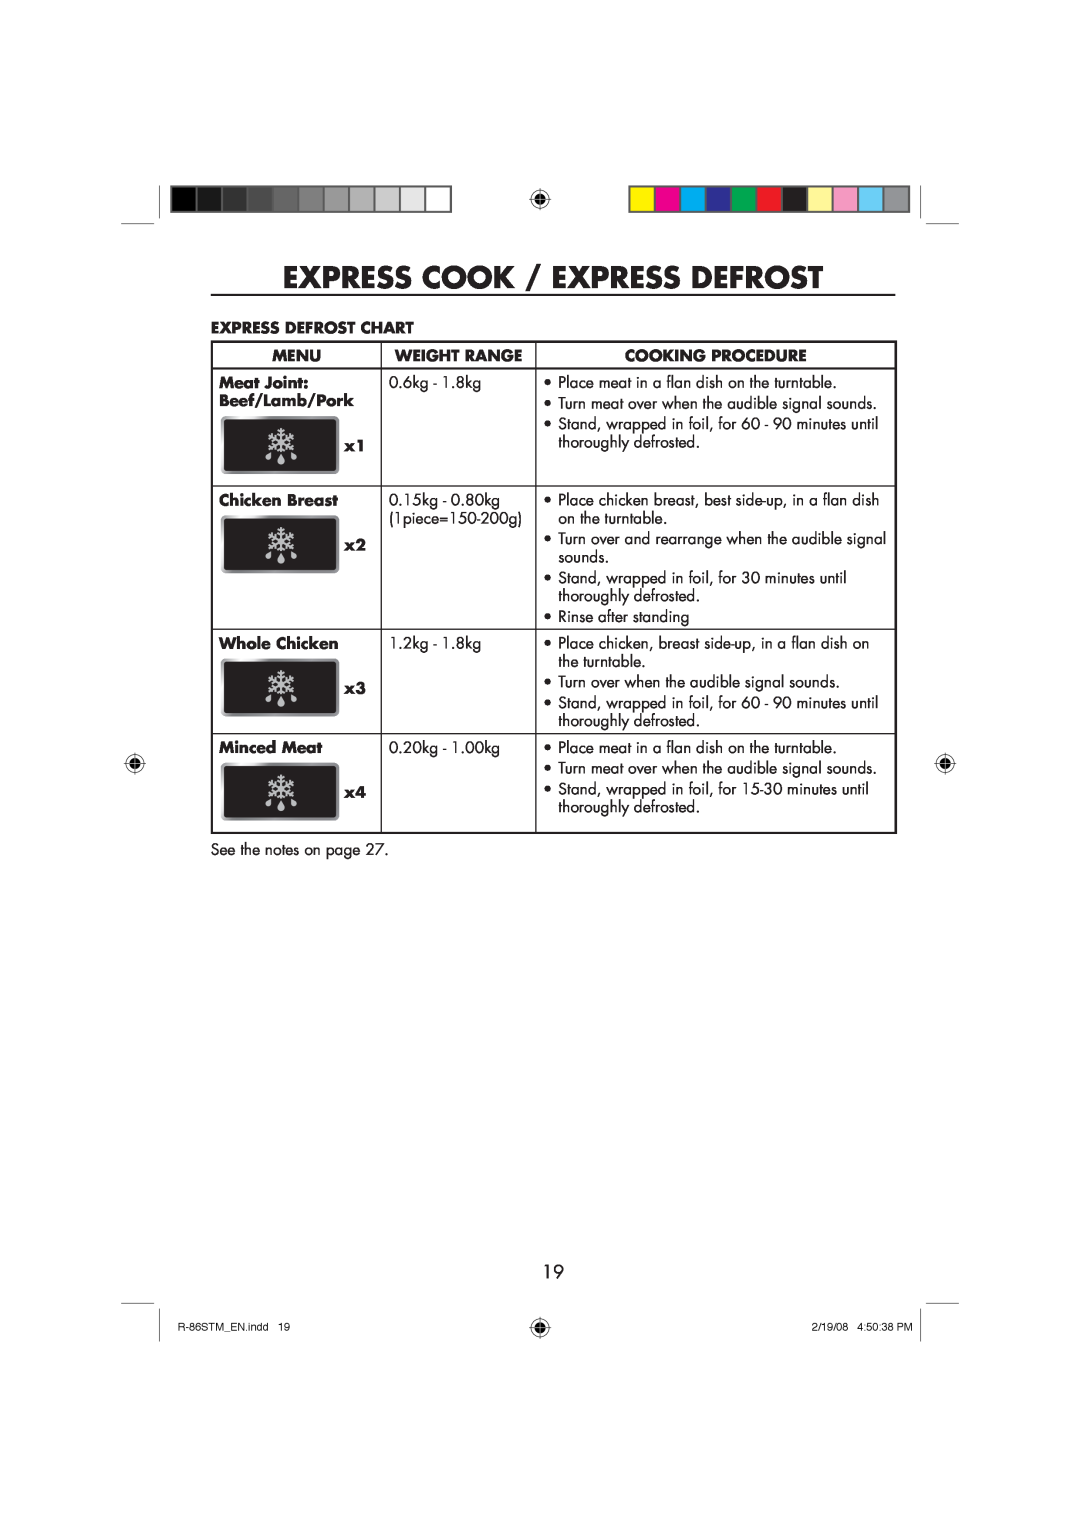 Sharp R-86STM Express Cook / Express Defrost, Express Defrost Chart, Menu, Weight Range, Cooking Procedure, Meat Joint 